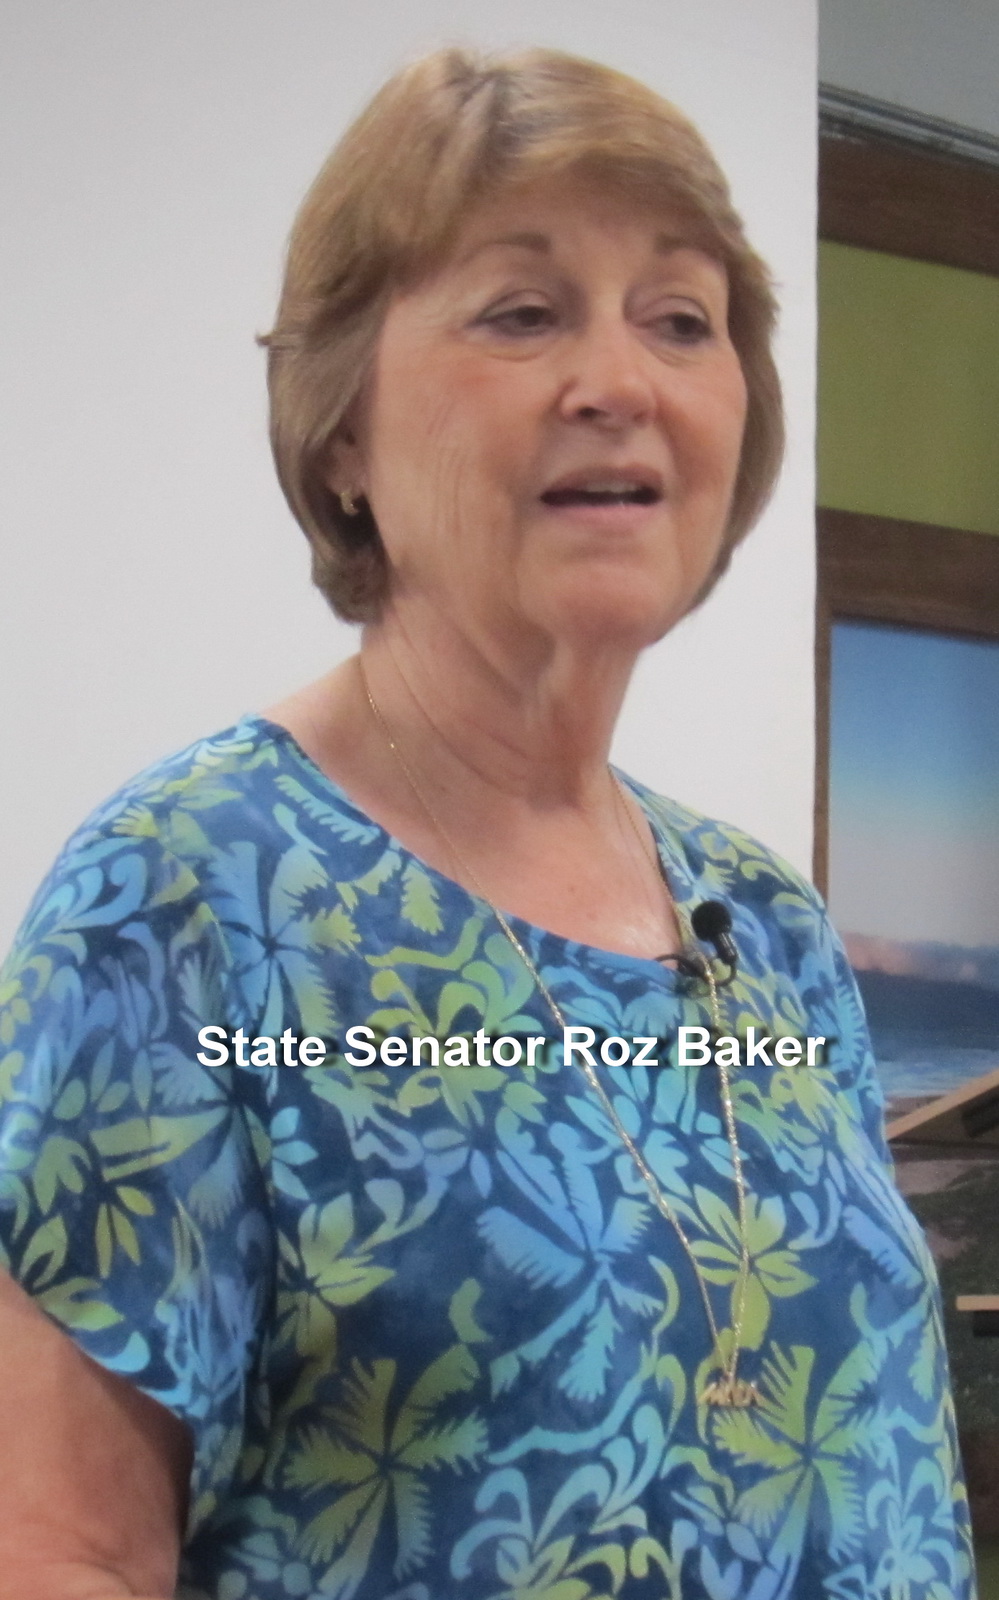 Senator Roz Baker concentrates on DOH high school in Kihei